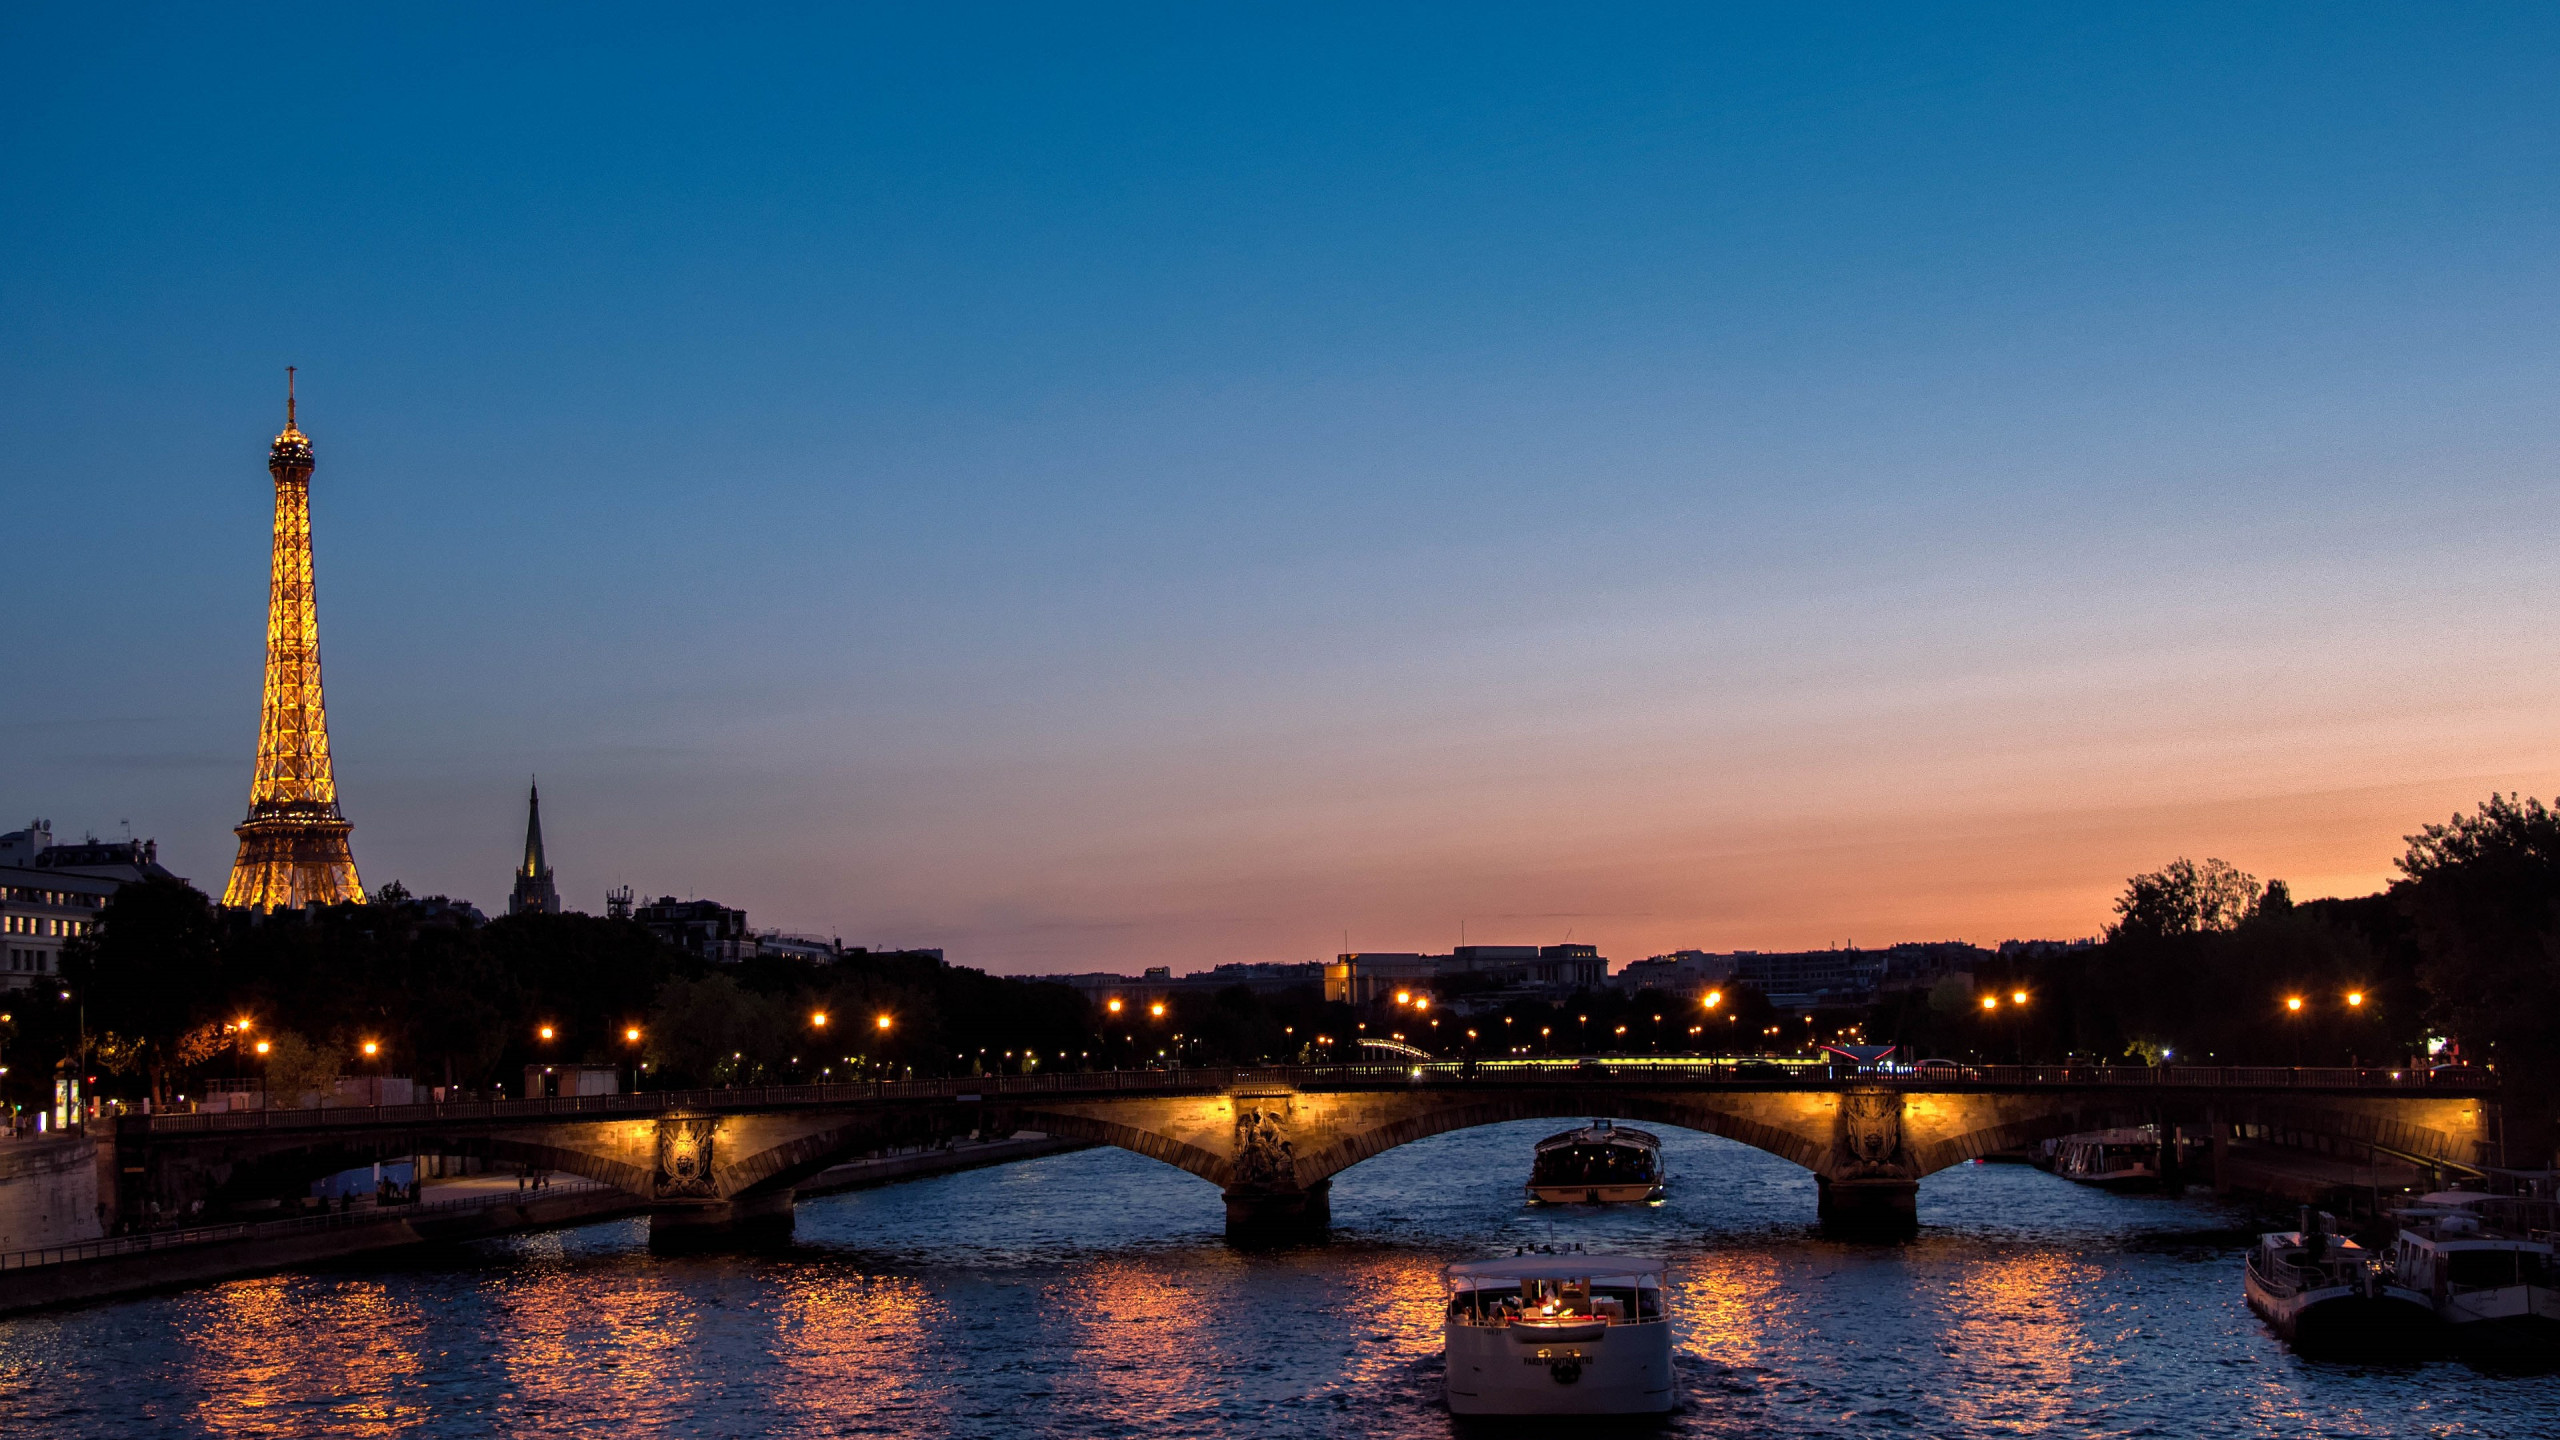 Paris at sunset wallpaper 2560x1440